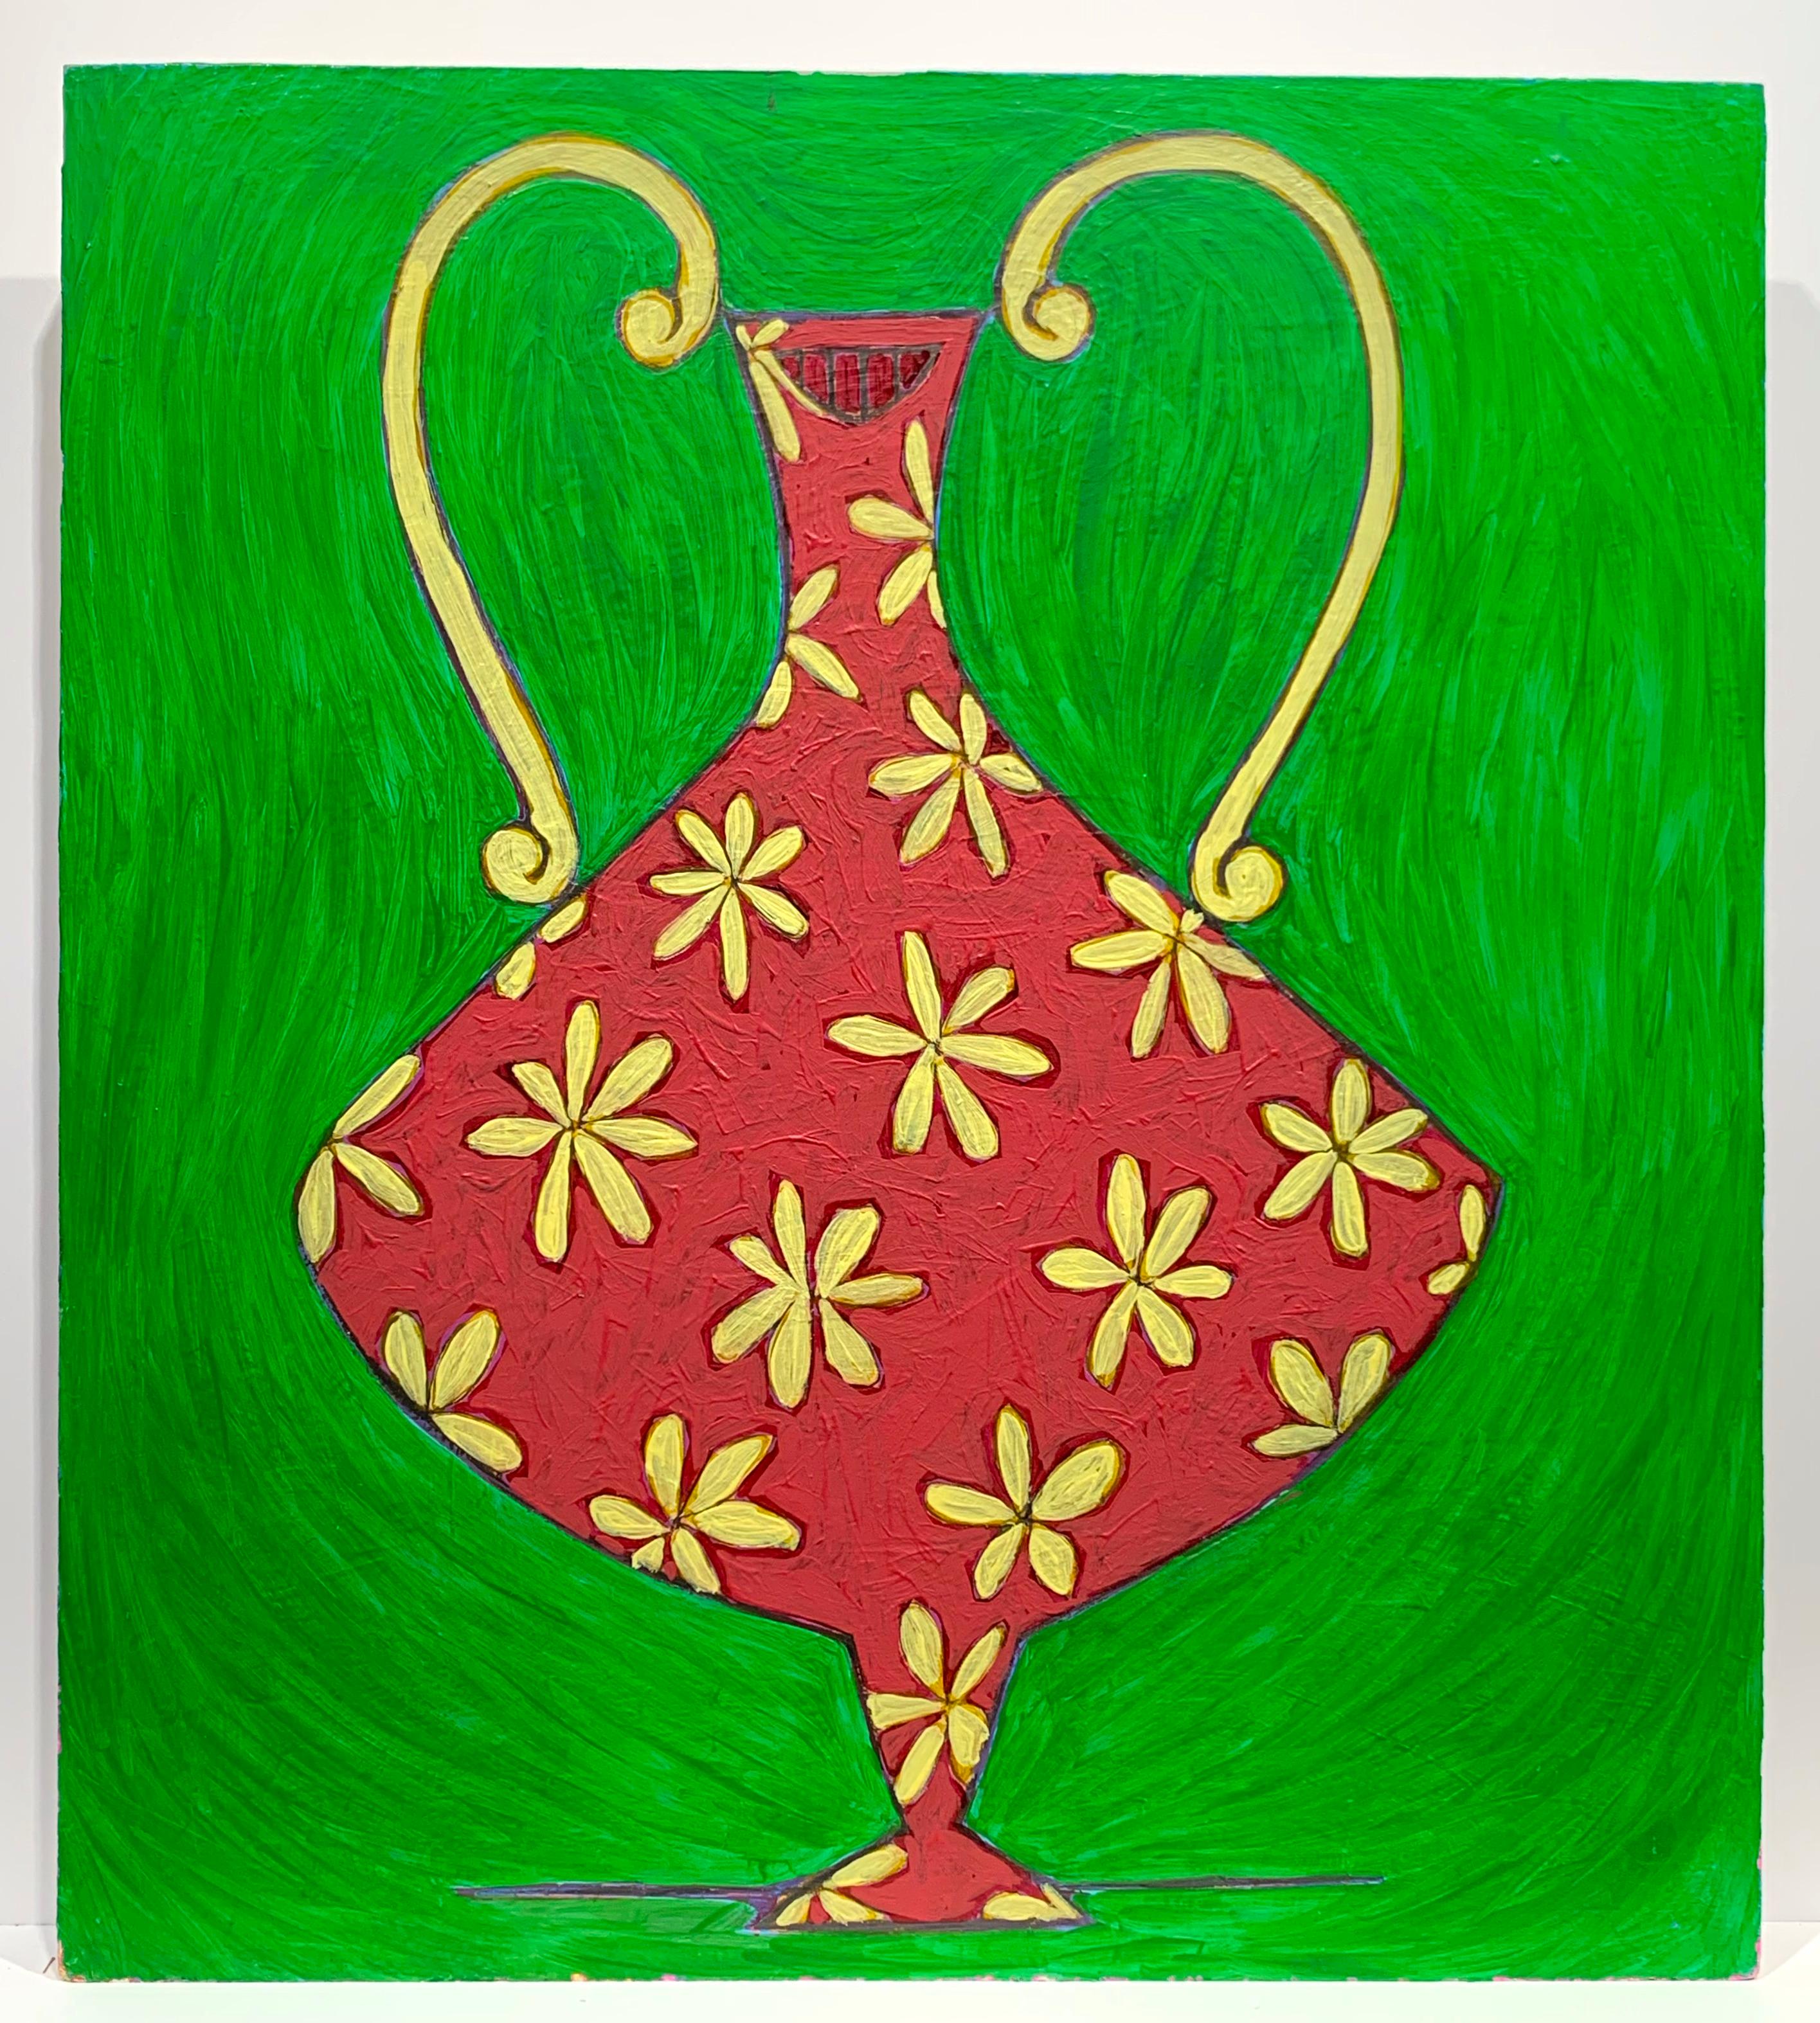 Manuel Pardo Figurative Painting - Abstract Floral Vase Still Life (Cuban artist)